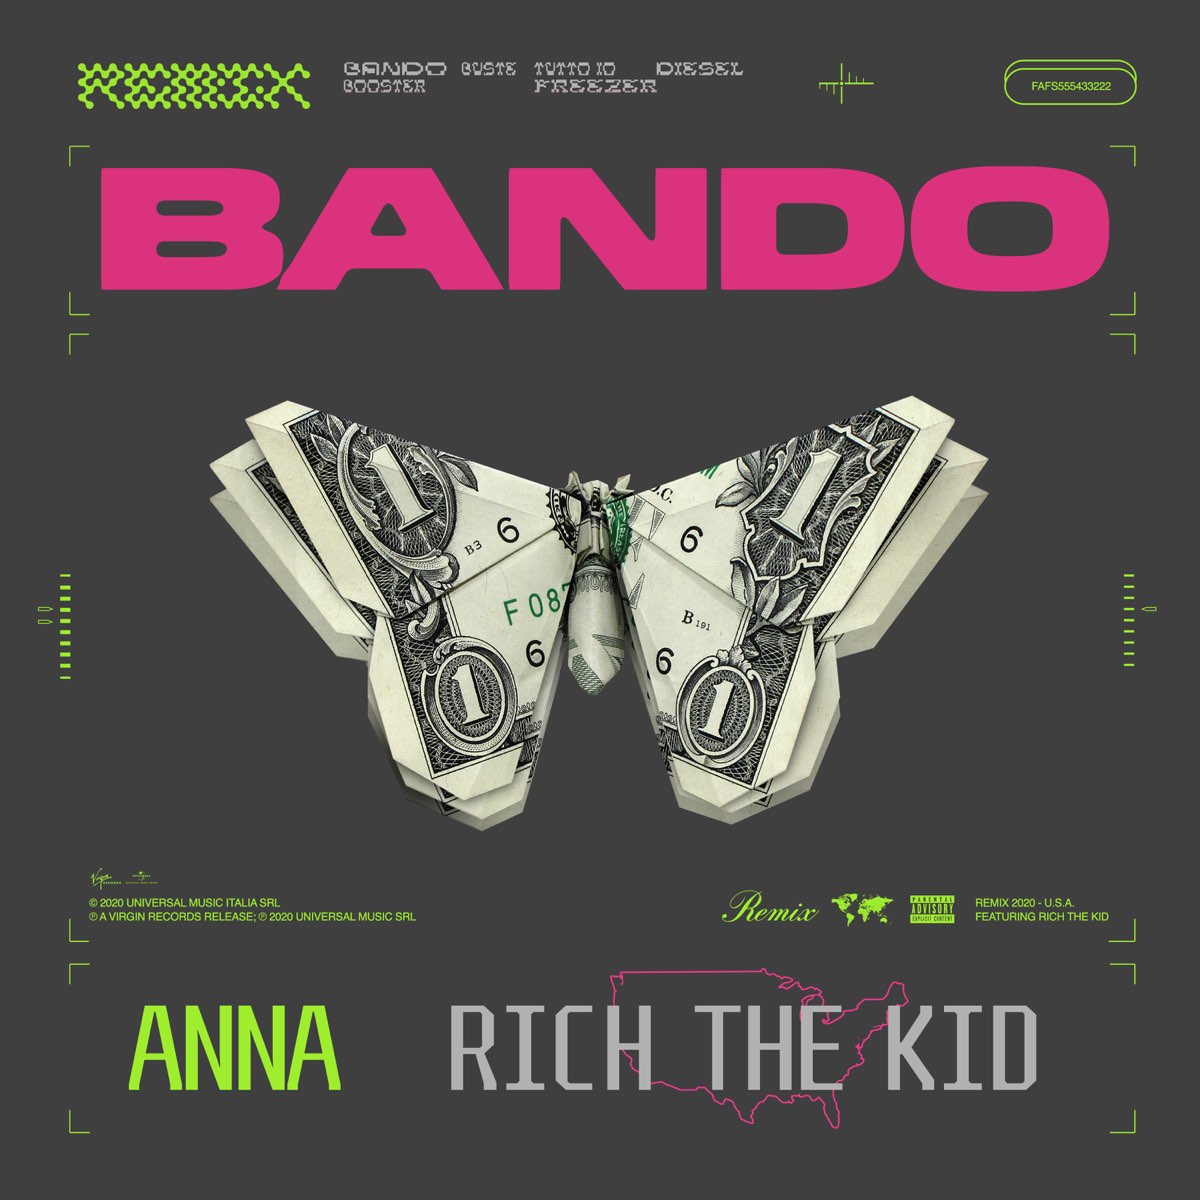 Anna ft. Rich The Kid - Bando (Remix)